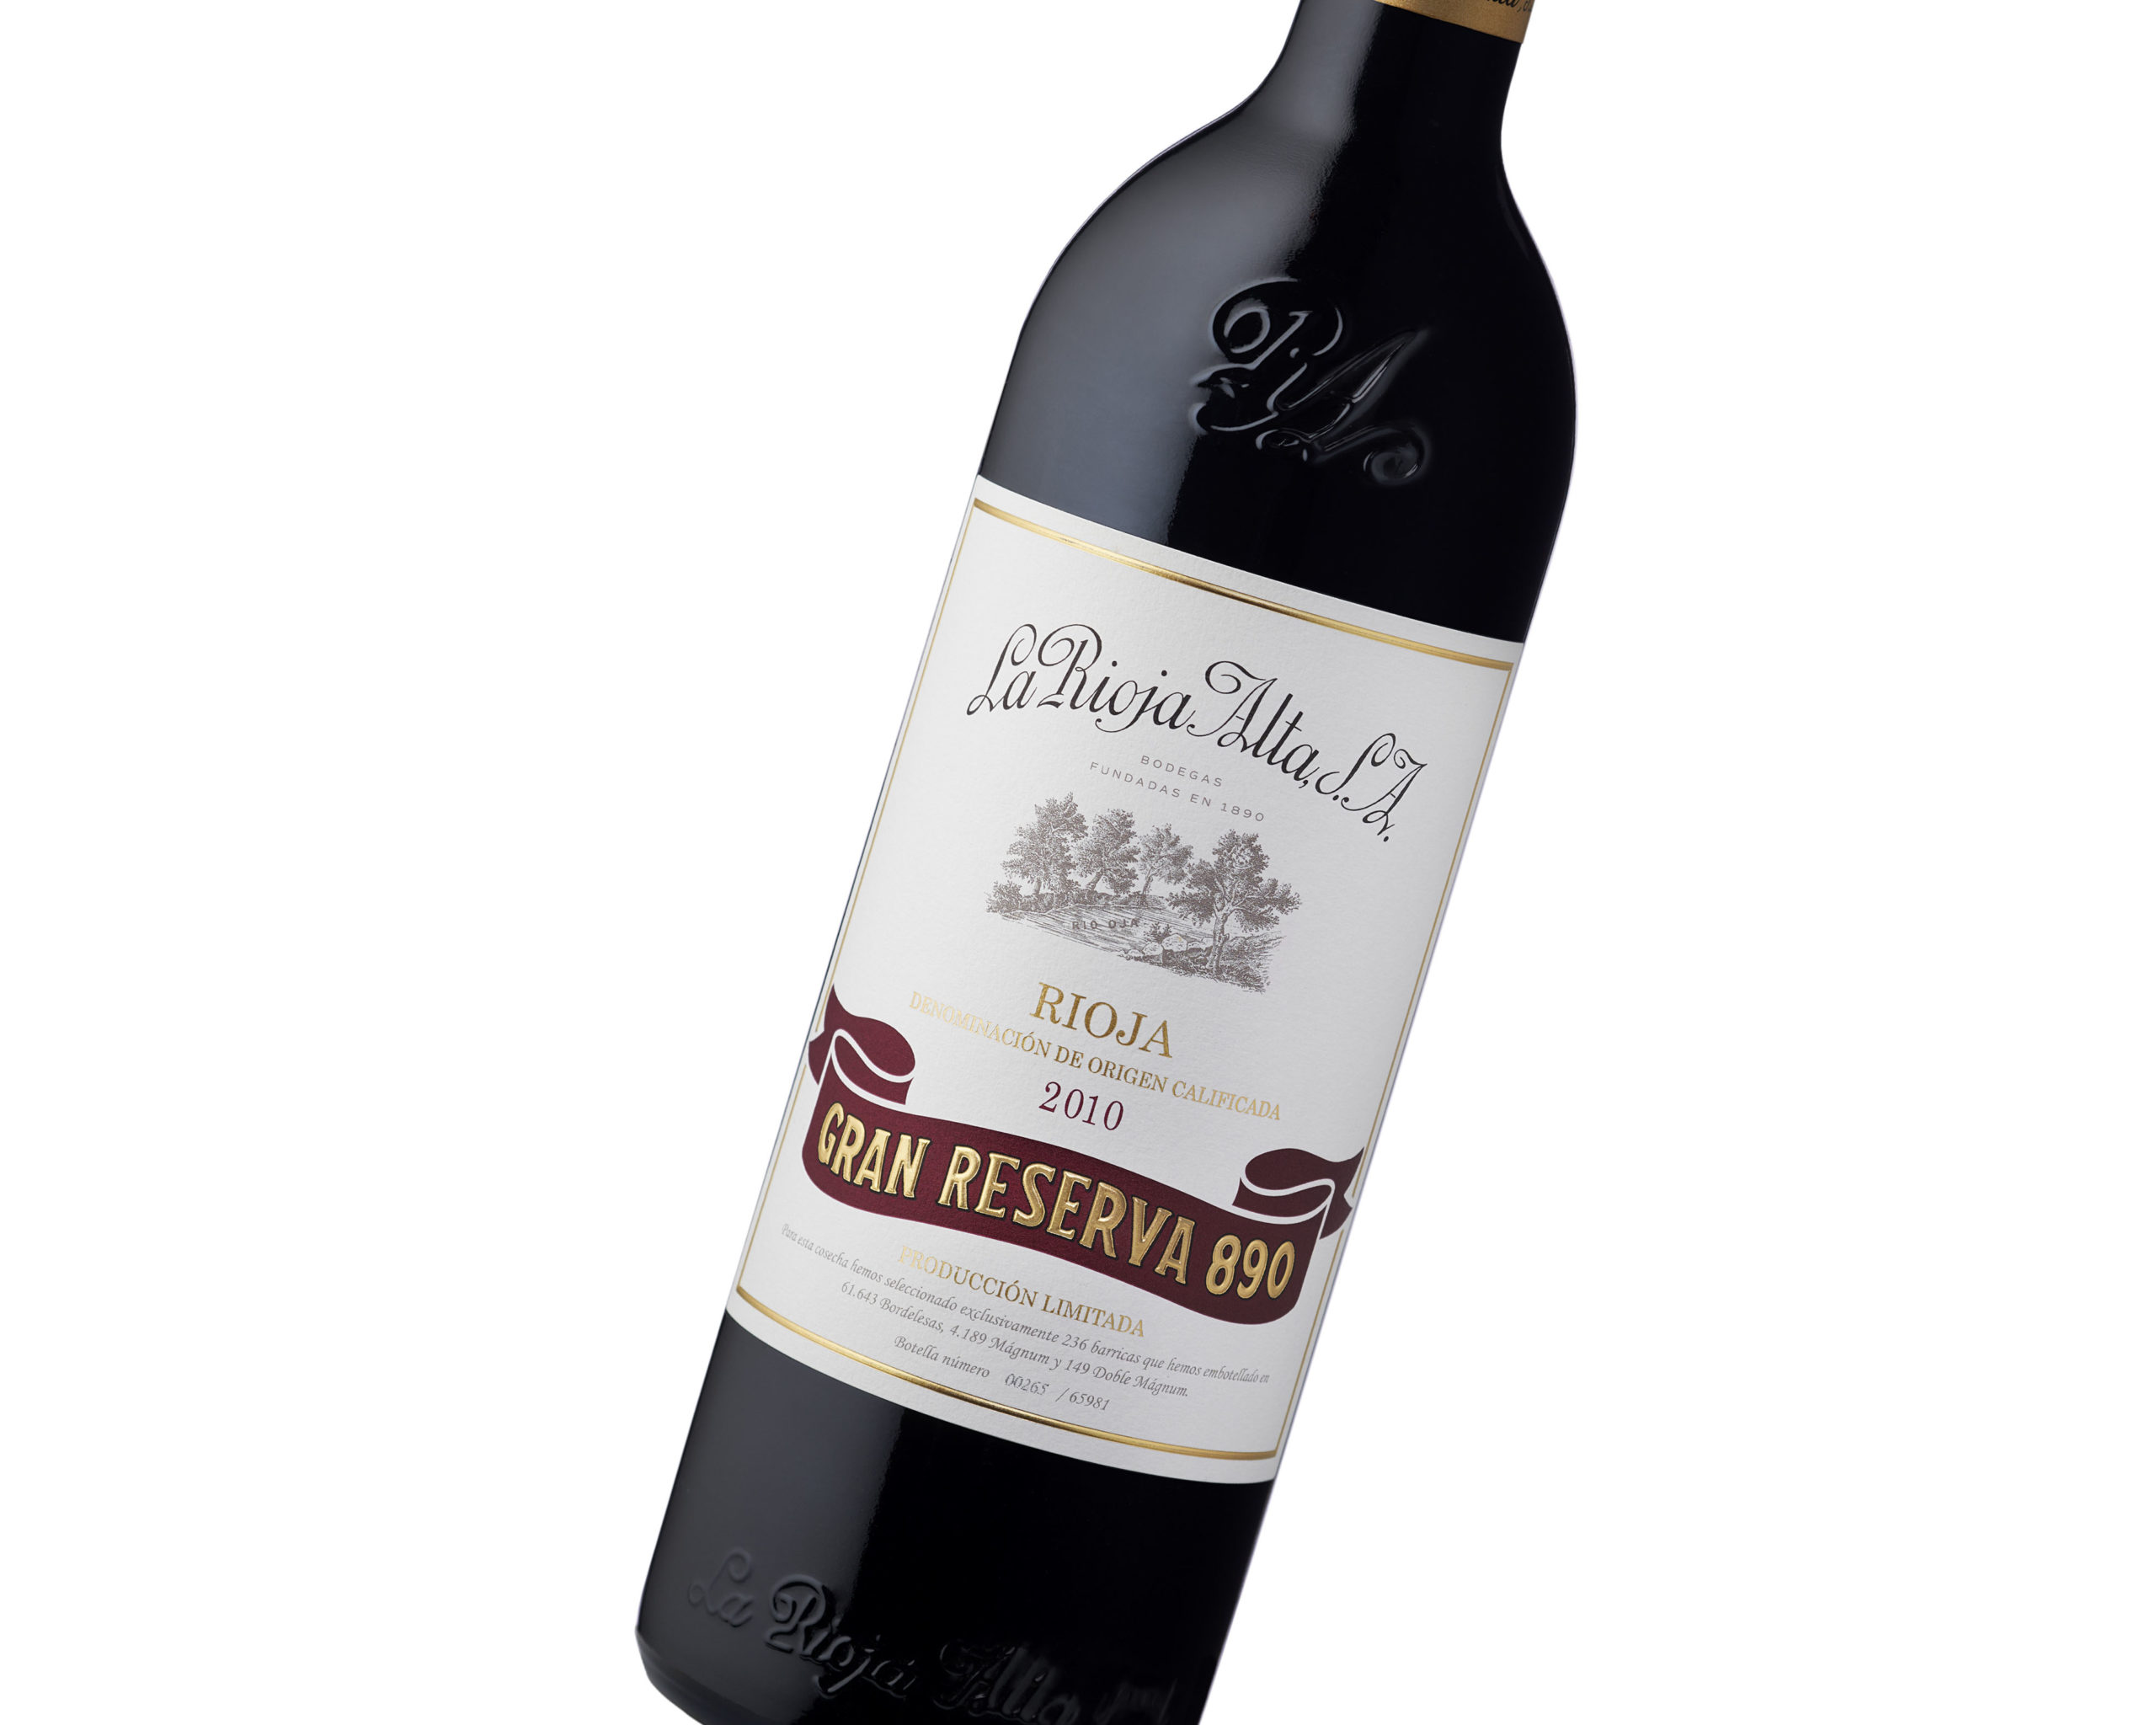 Rioja Alta Gran Reserva 890. Labelgrafic etiquetas vino